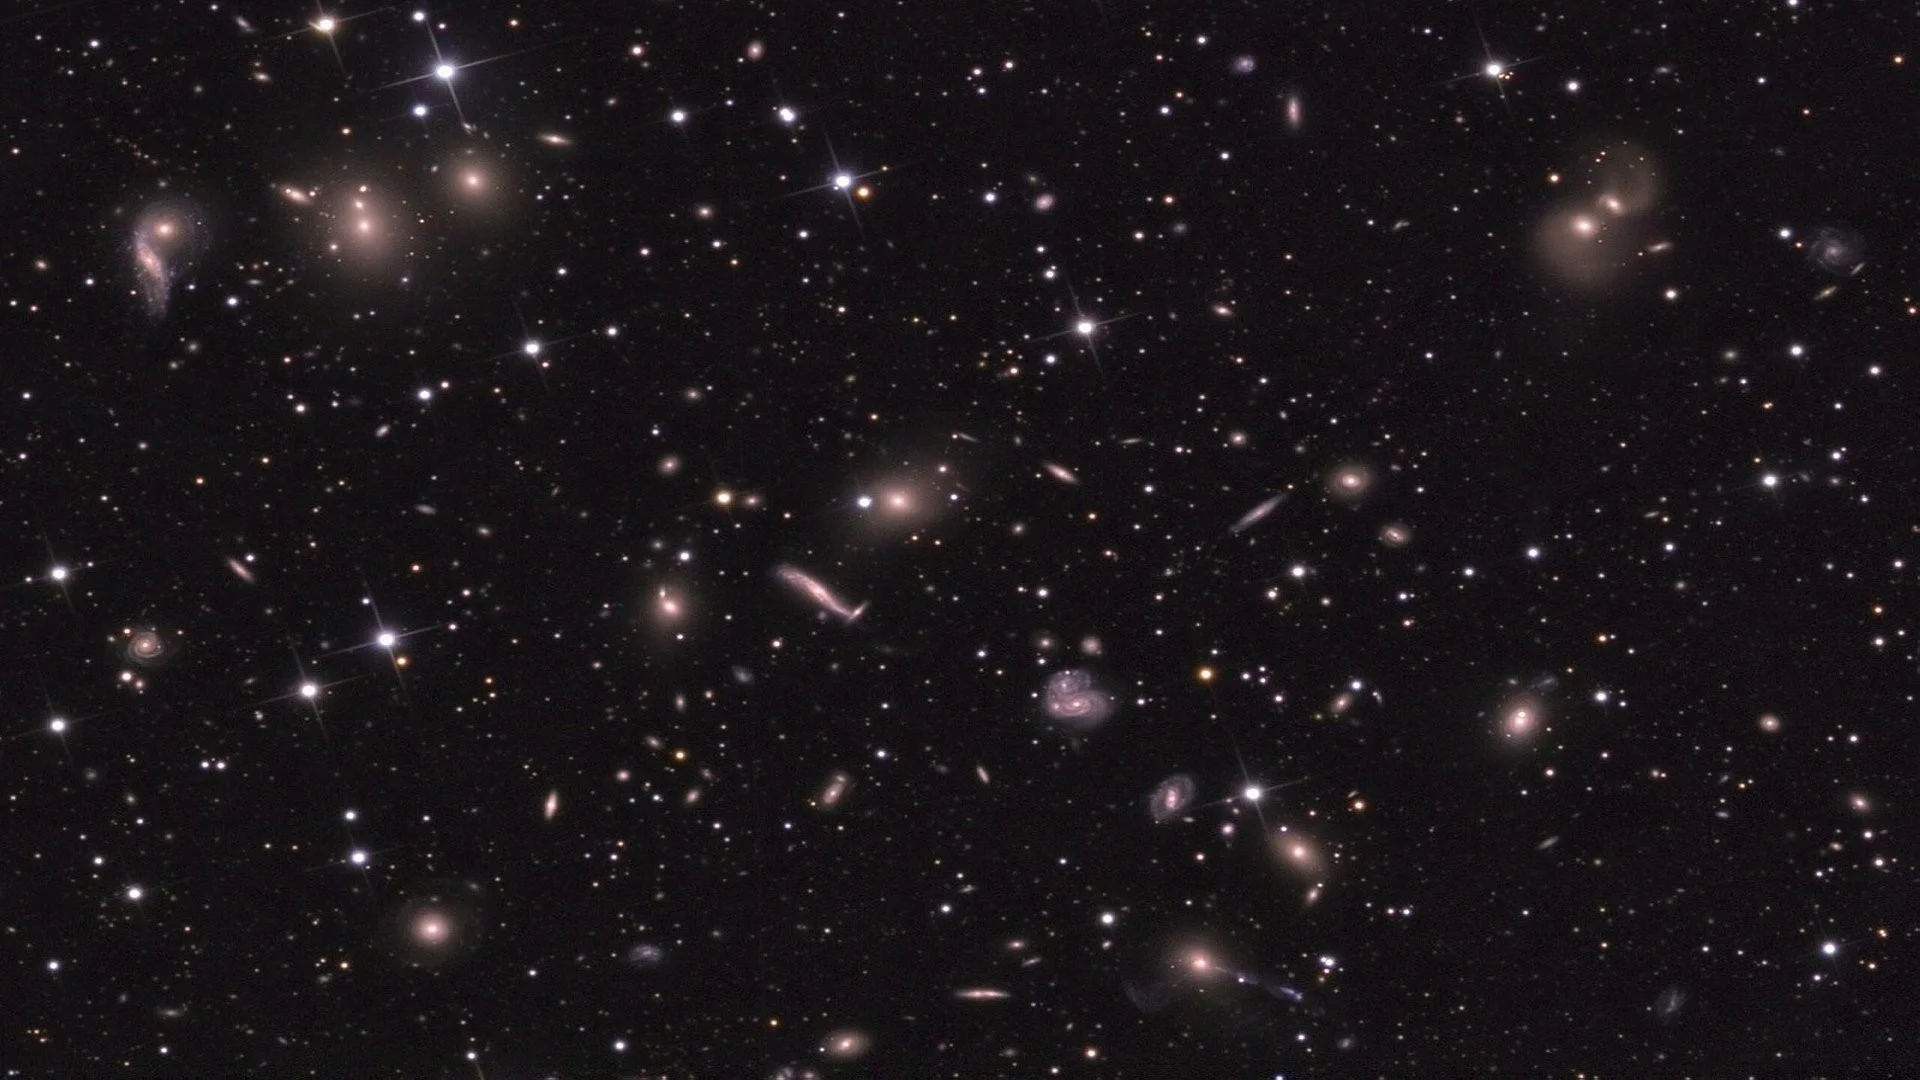 Star wars wallpaper wallpapers war pixel galaxy galaxies space hercules large cluster